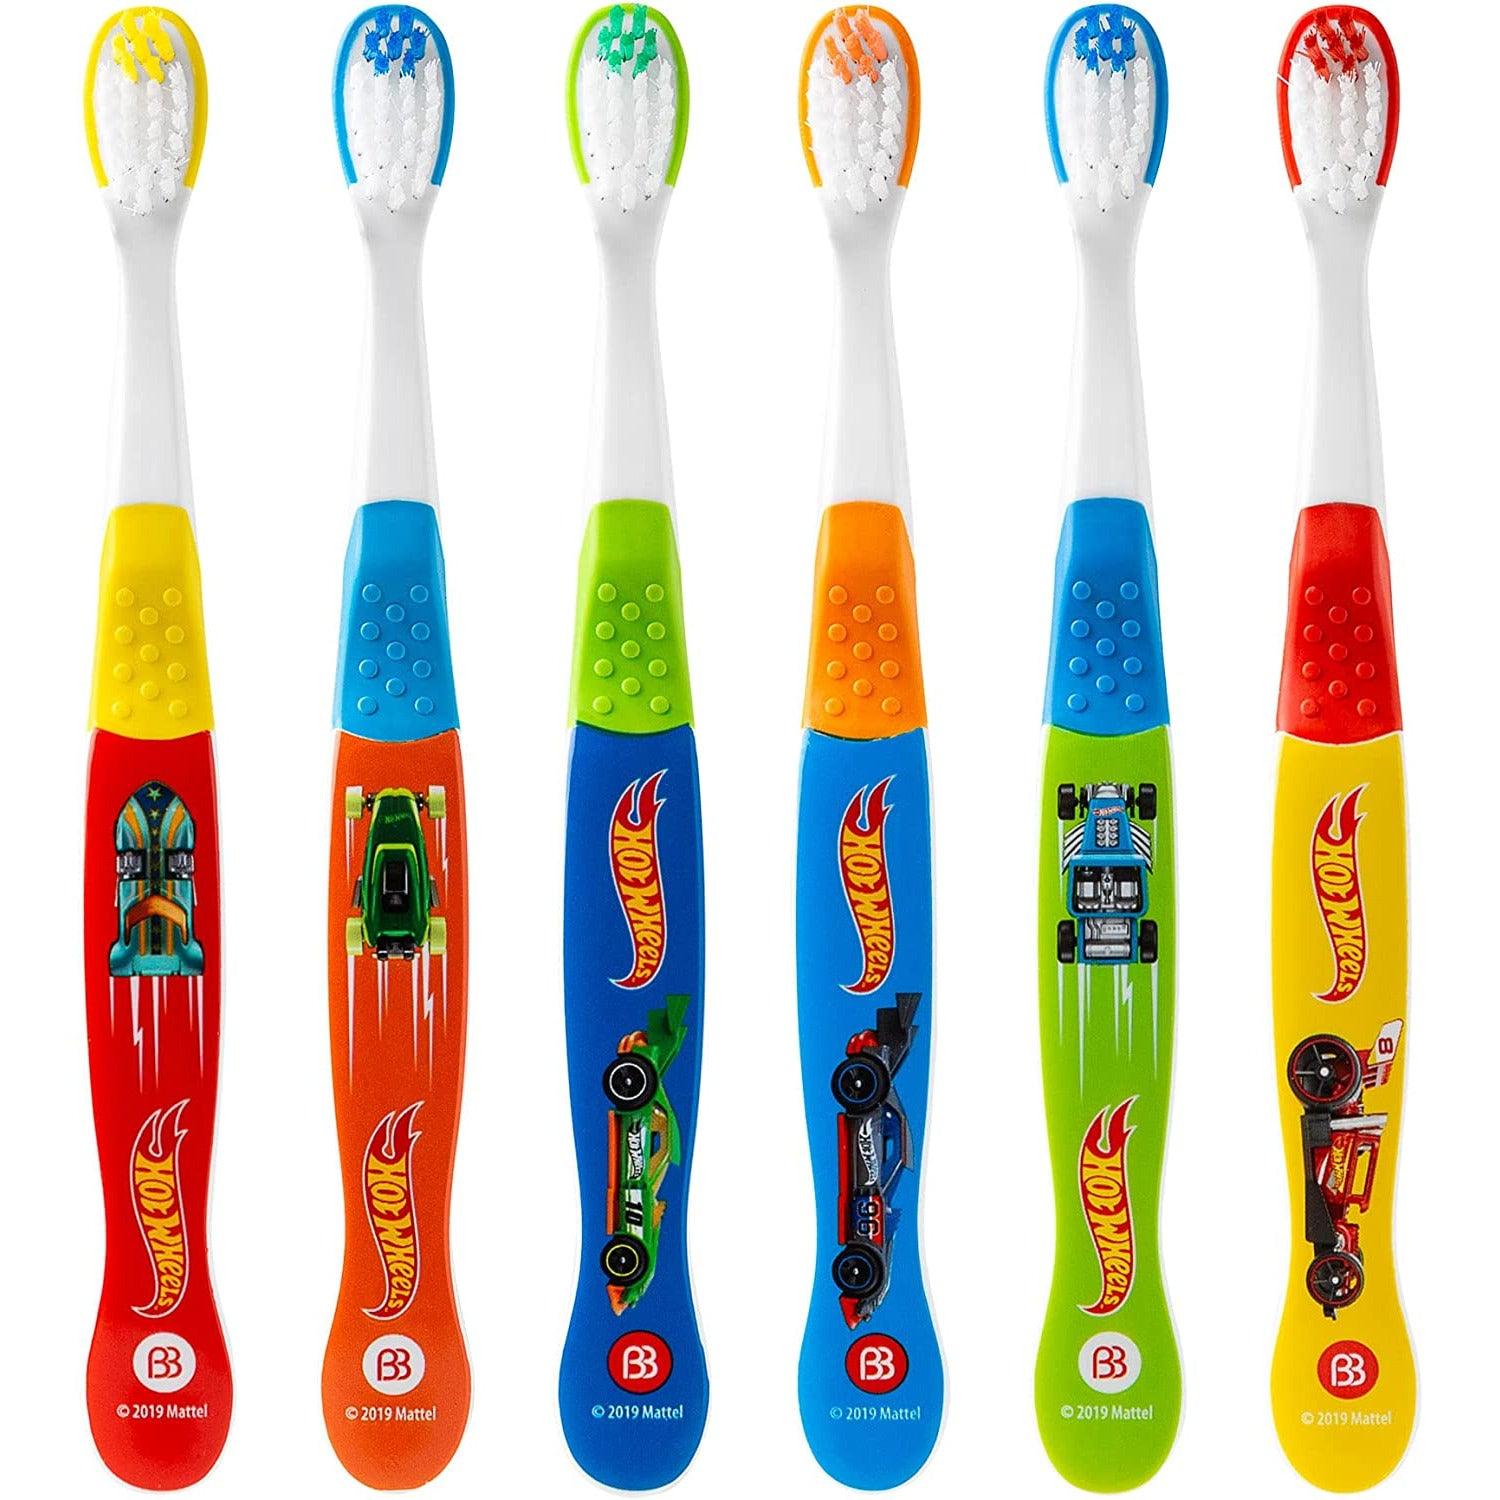 Brush Buddies Hot Wheels Toothbrush for Kids - 6PK - BumbleToys - 4+ Years, 5-7 Years, Baby Saftey & Health, hot wheels, Pre-Order, Toothbrush